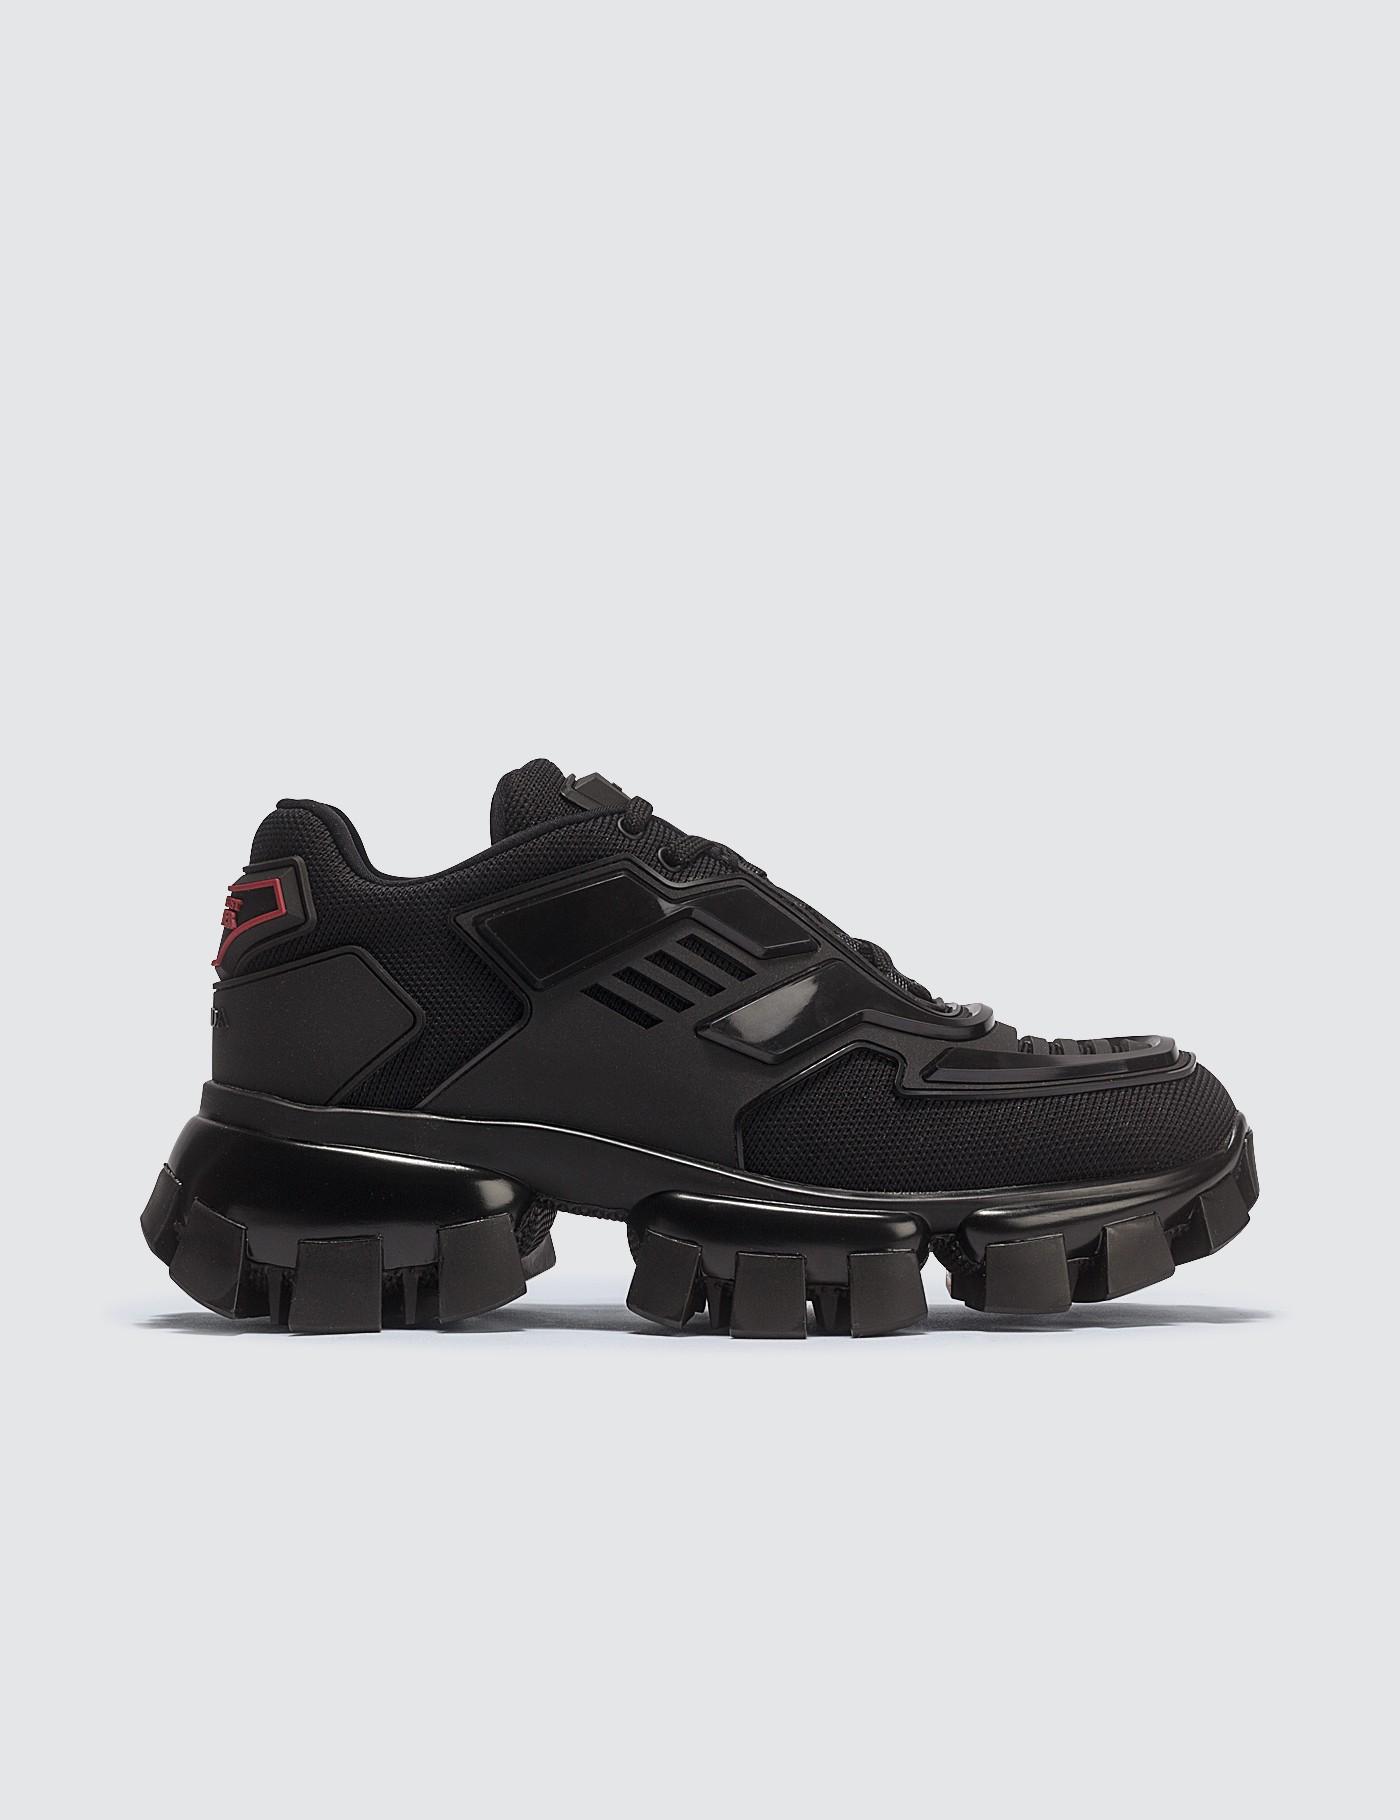 Prada Rubber Cloudbust Thunder Sneakers in Black - Lyst